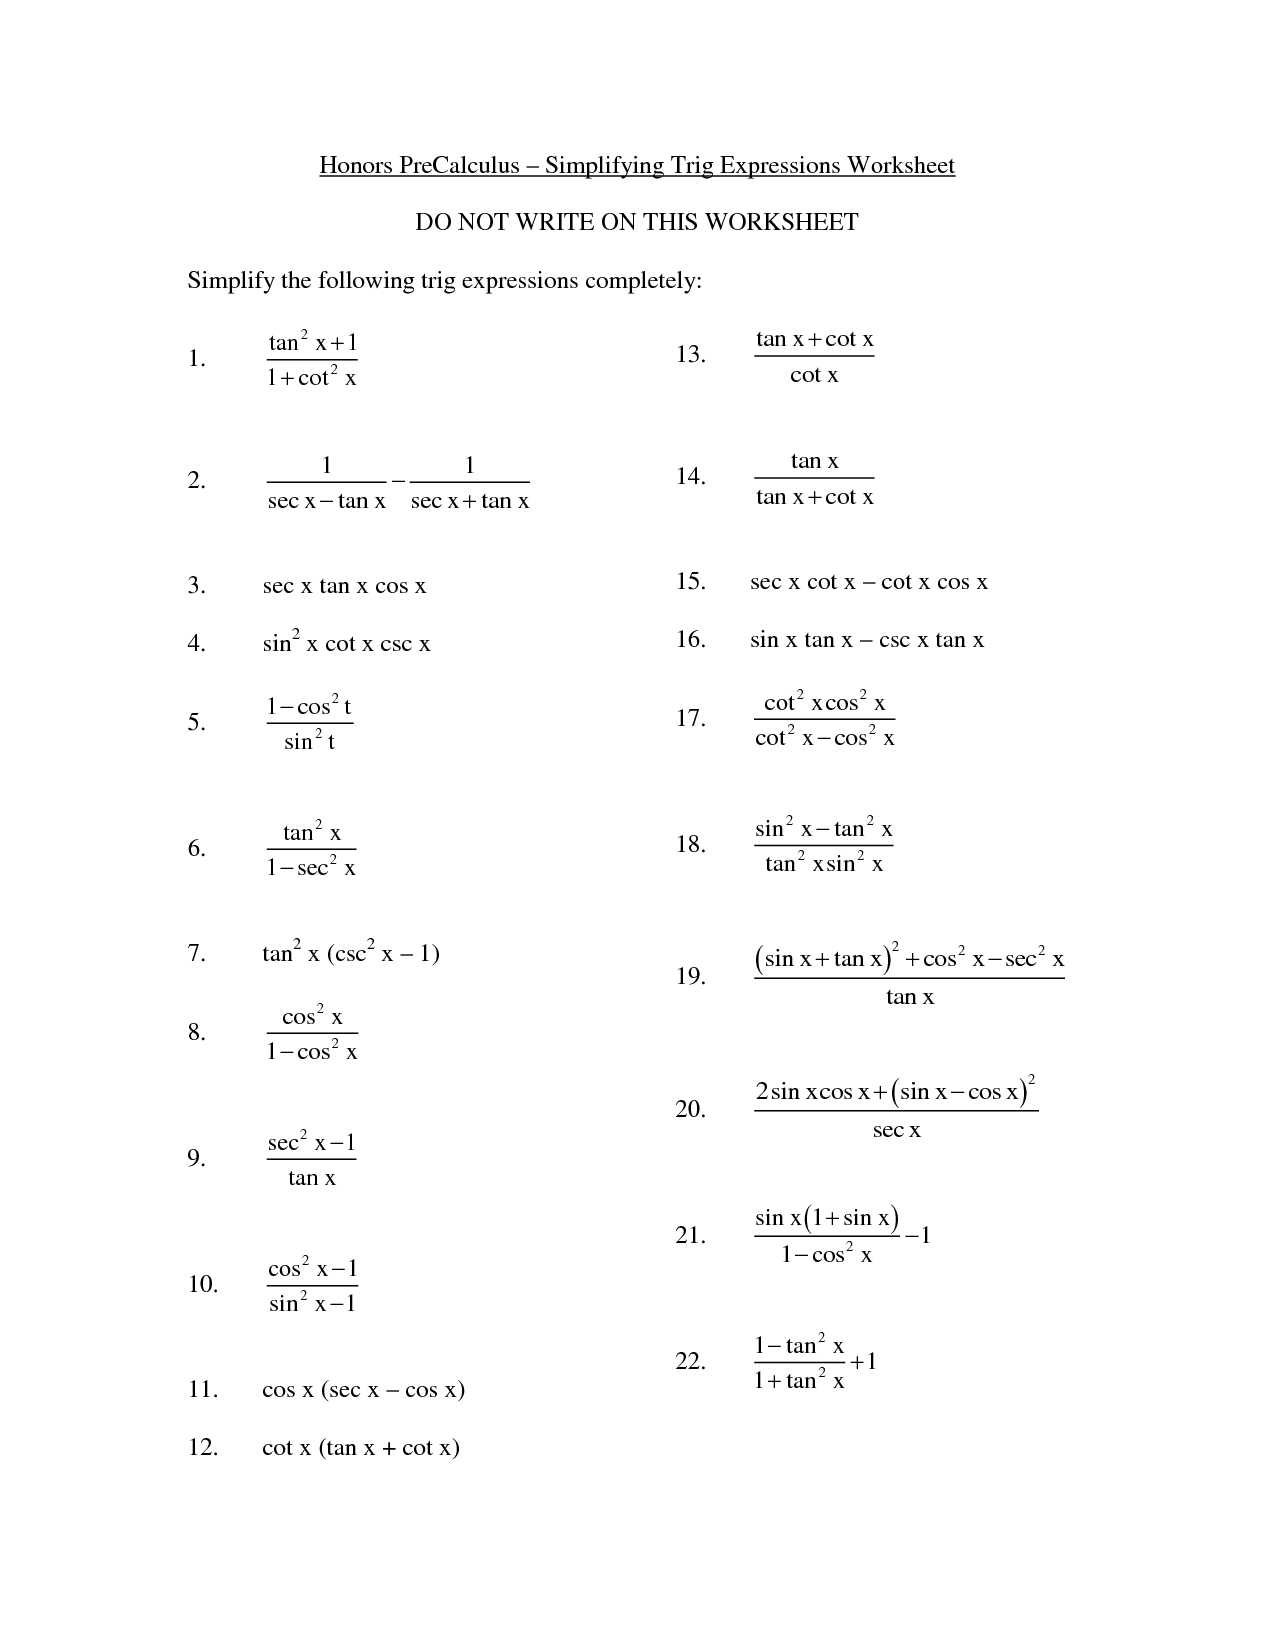 Simplifying Trigonometric Identities Worksheet as Well as Co Functions Worksheet Gallery Worksheet Math for Kids